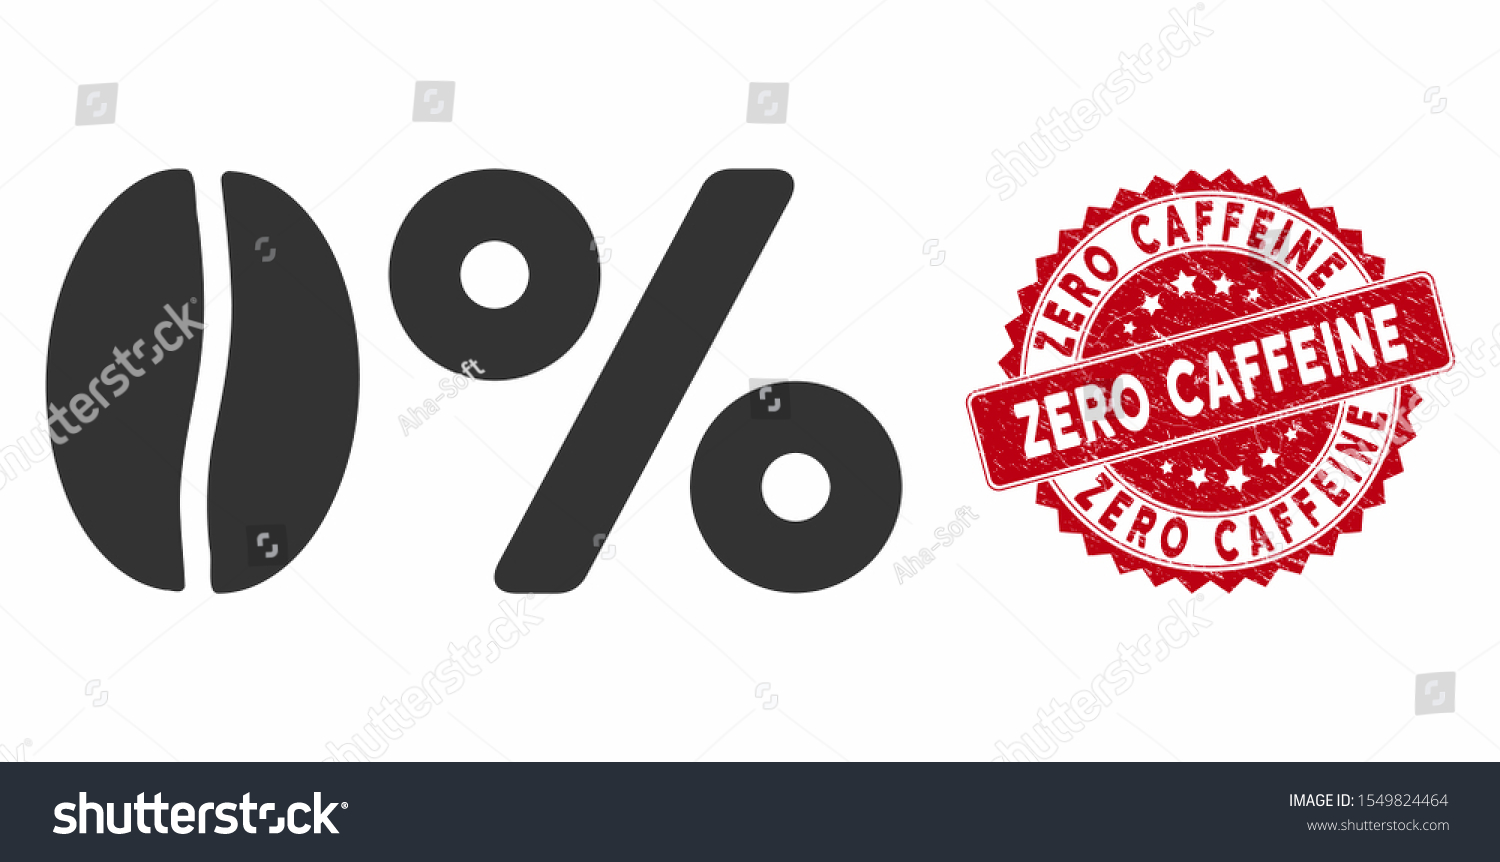 SVG of Vector zero caffeine icon and grunge round stamp seal with Zero Caffeine text. Flat zero caffeine icon is isolated on a white background. Zero Caffeine stamp seal uses red color and grunge surface. svg